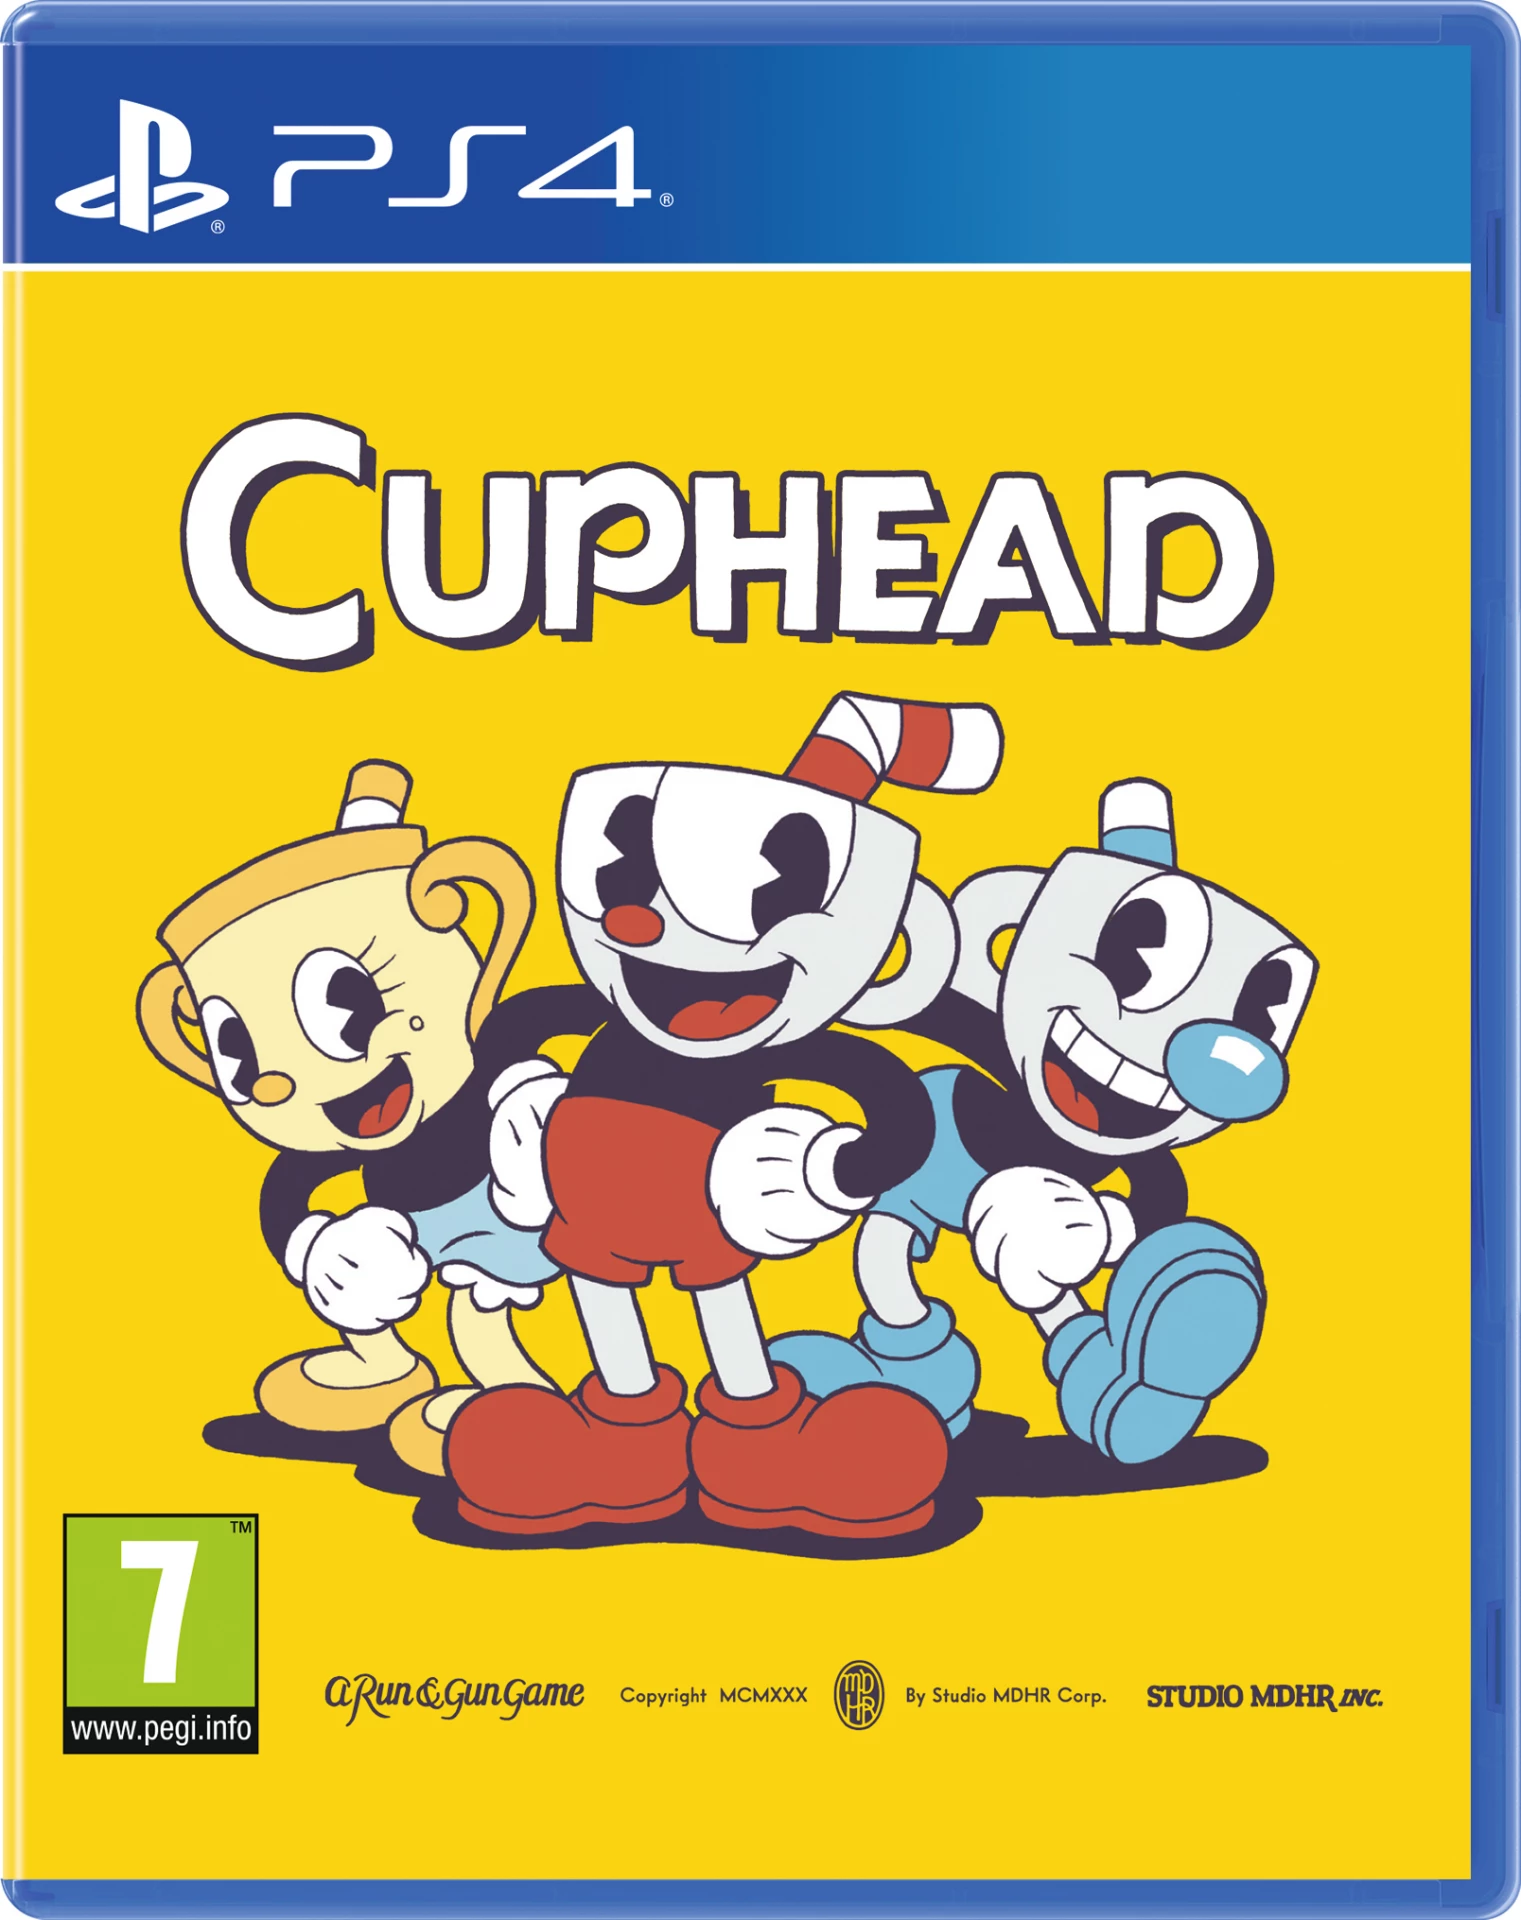 Cuphead (PS4), A Run & Gun Game, Studio MDHR